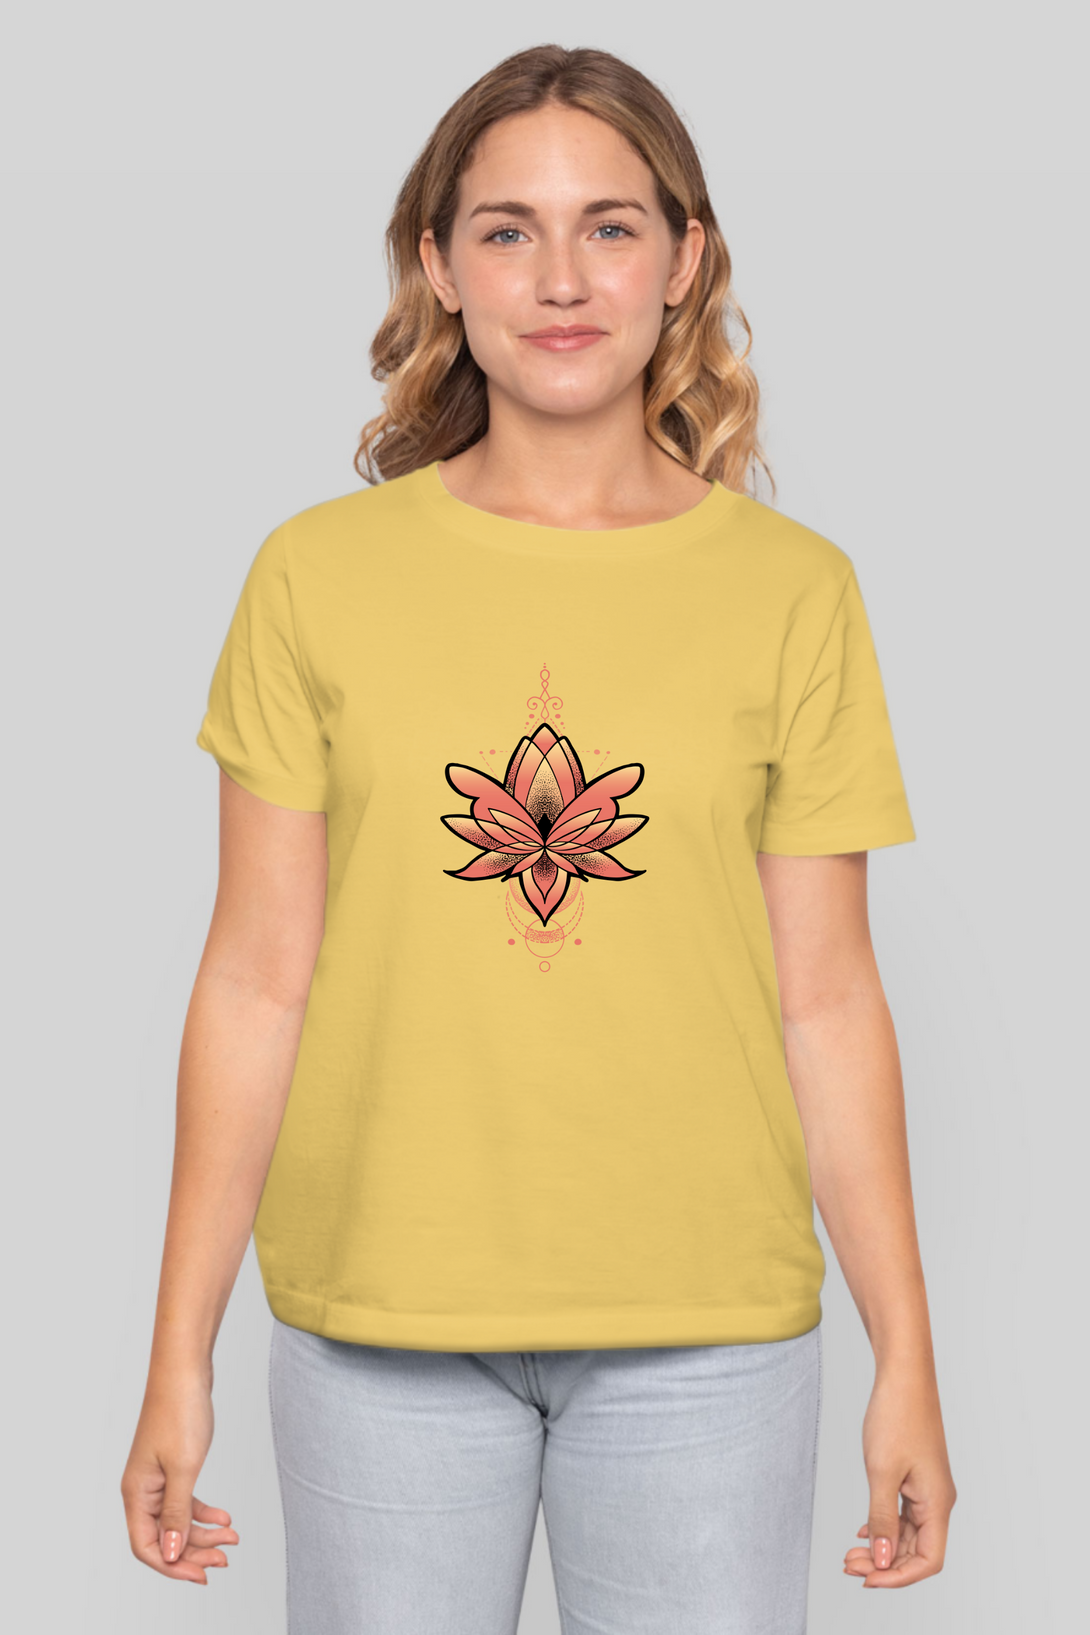 Geometric Lotus Printed T-Shirt For Women - WowWaves - 7